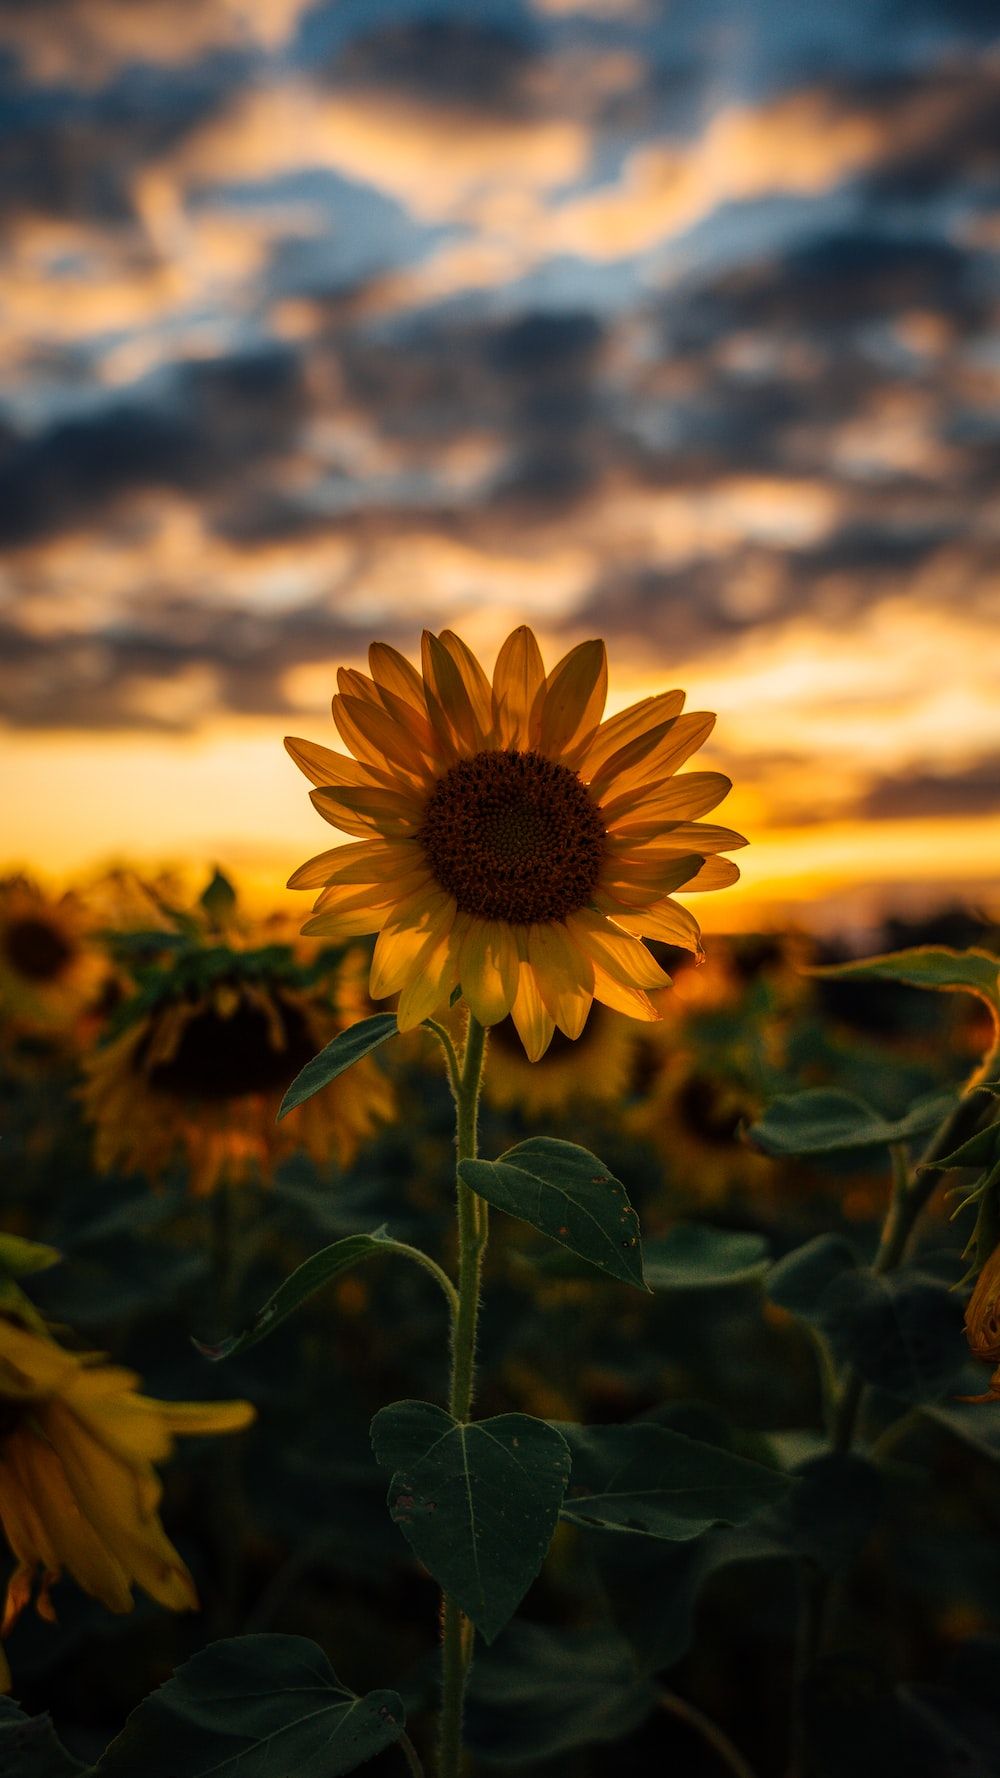 A sunflower stands tall in a field at sunset. - Sunflower